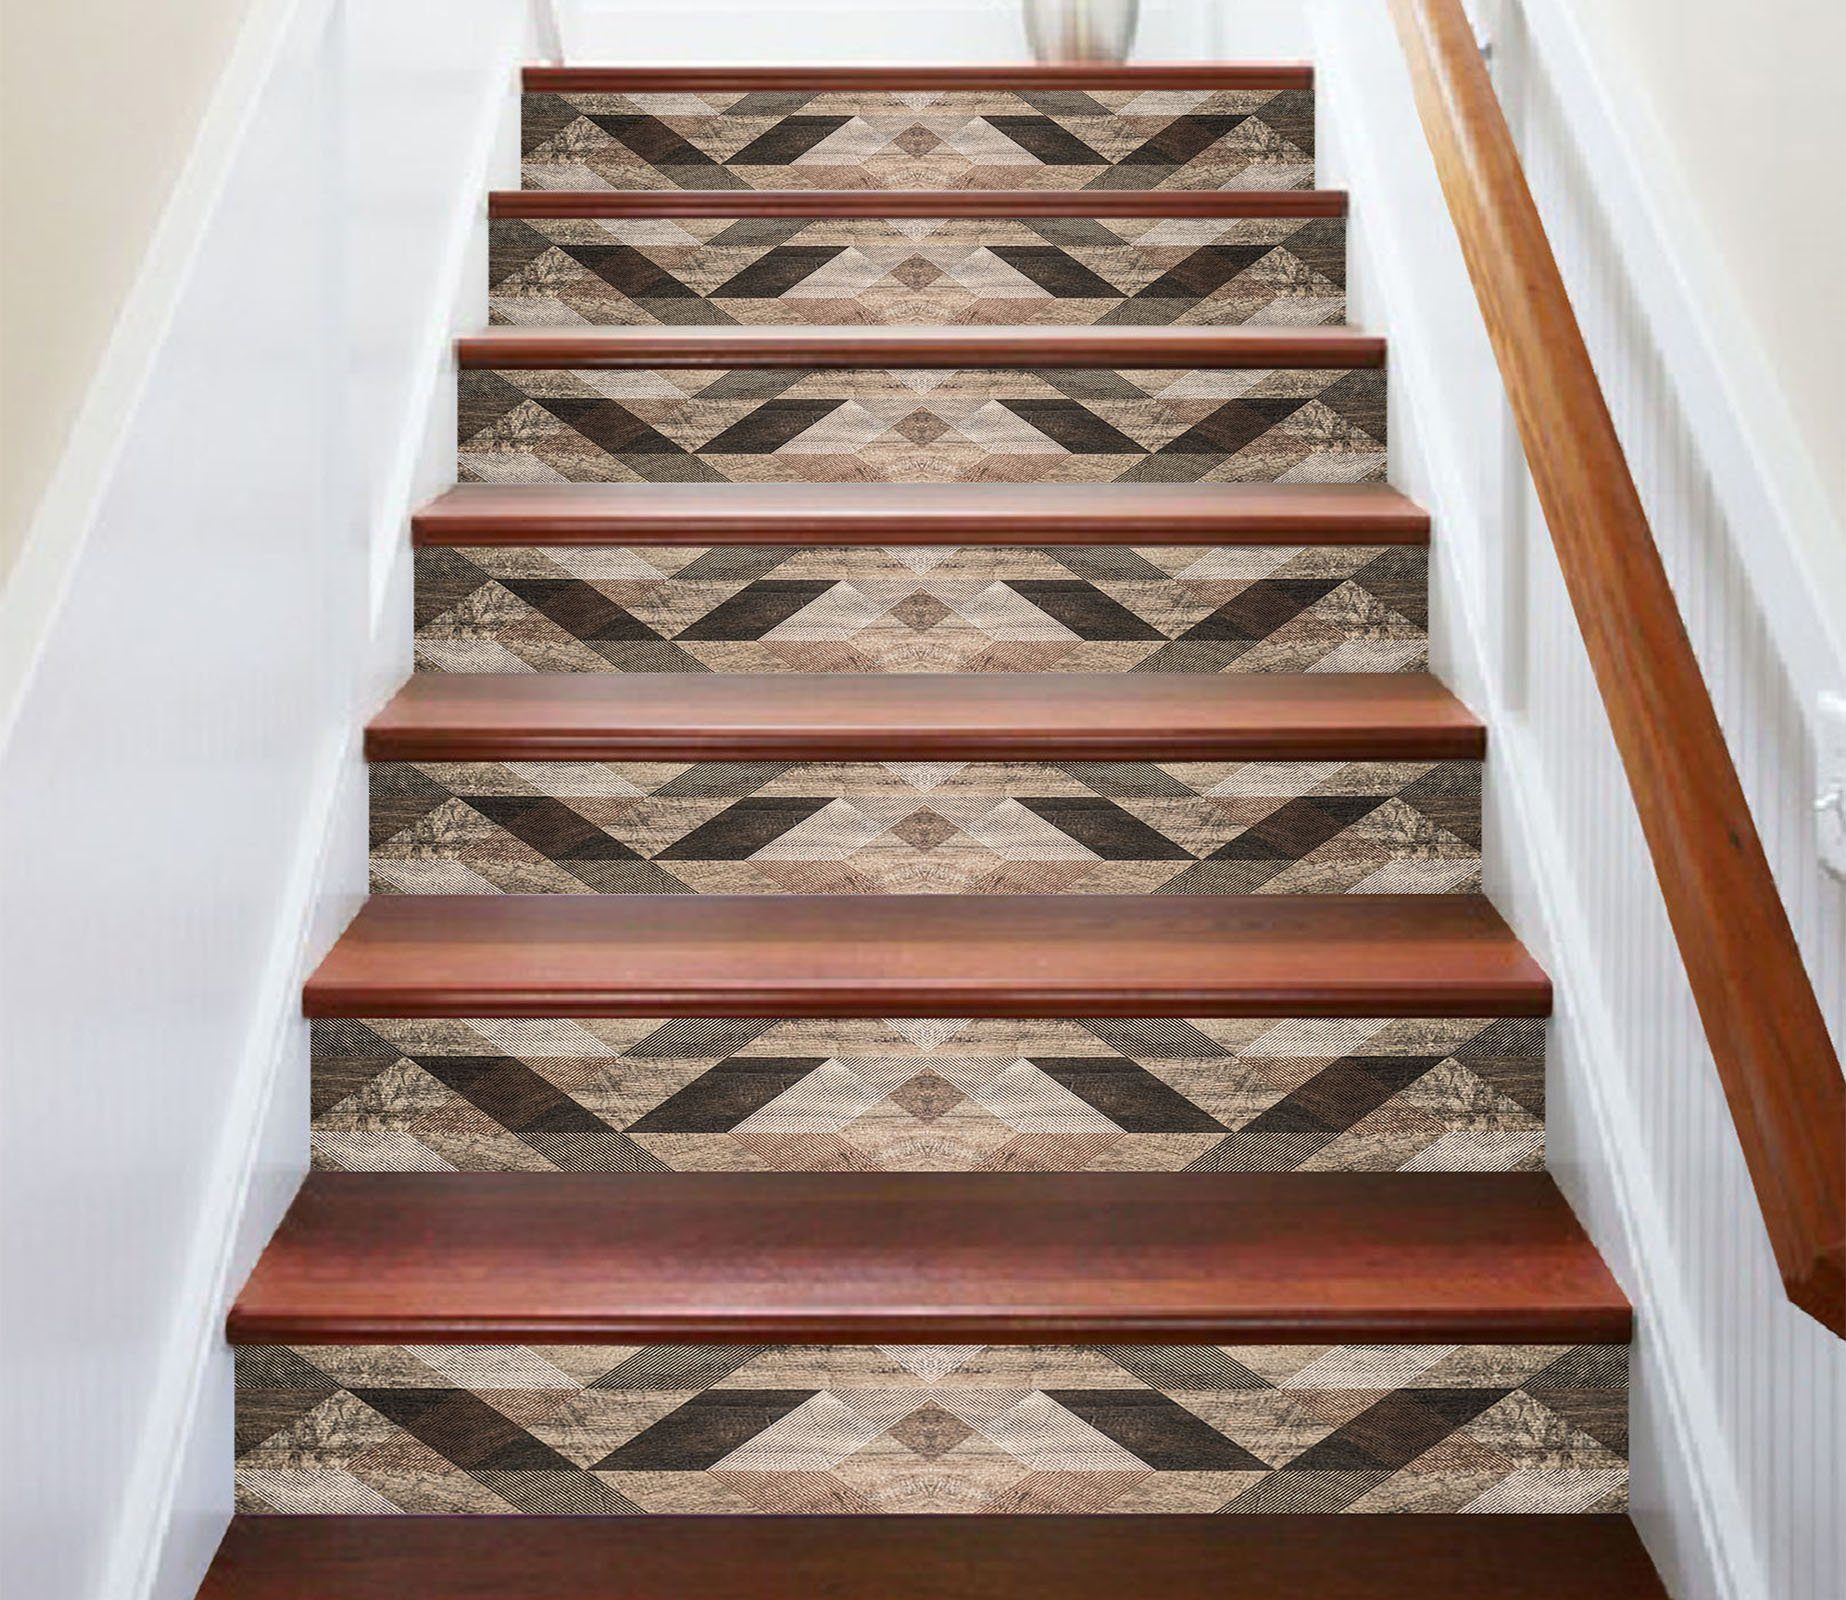 3D Parallelogram Mosaic 0650 Marble Tile Texture Stair Risers Wallpaper AJ Wallpaper 